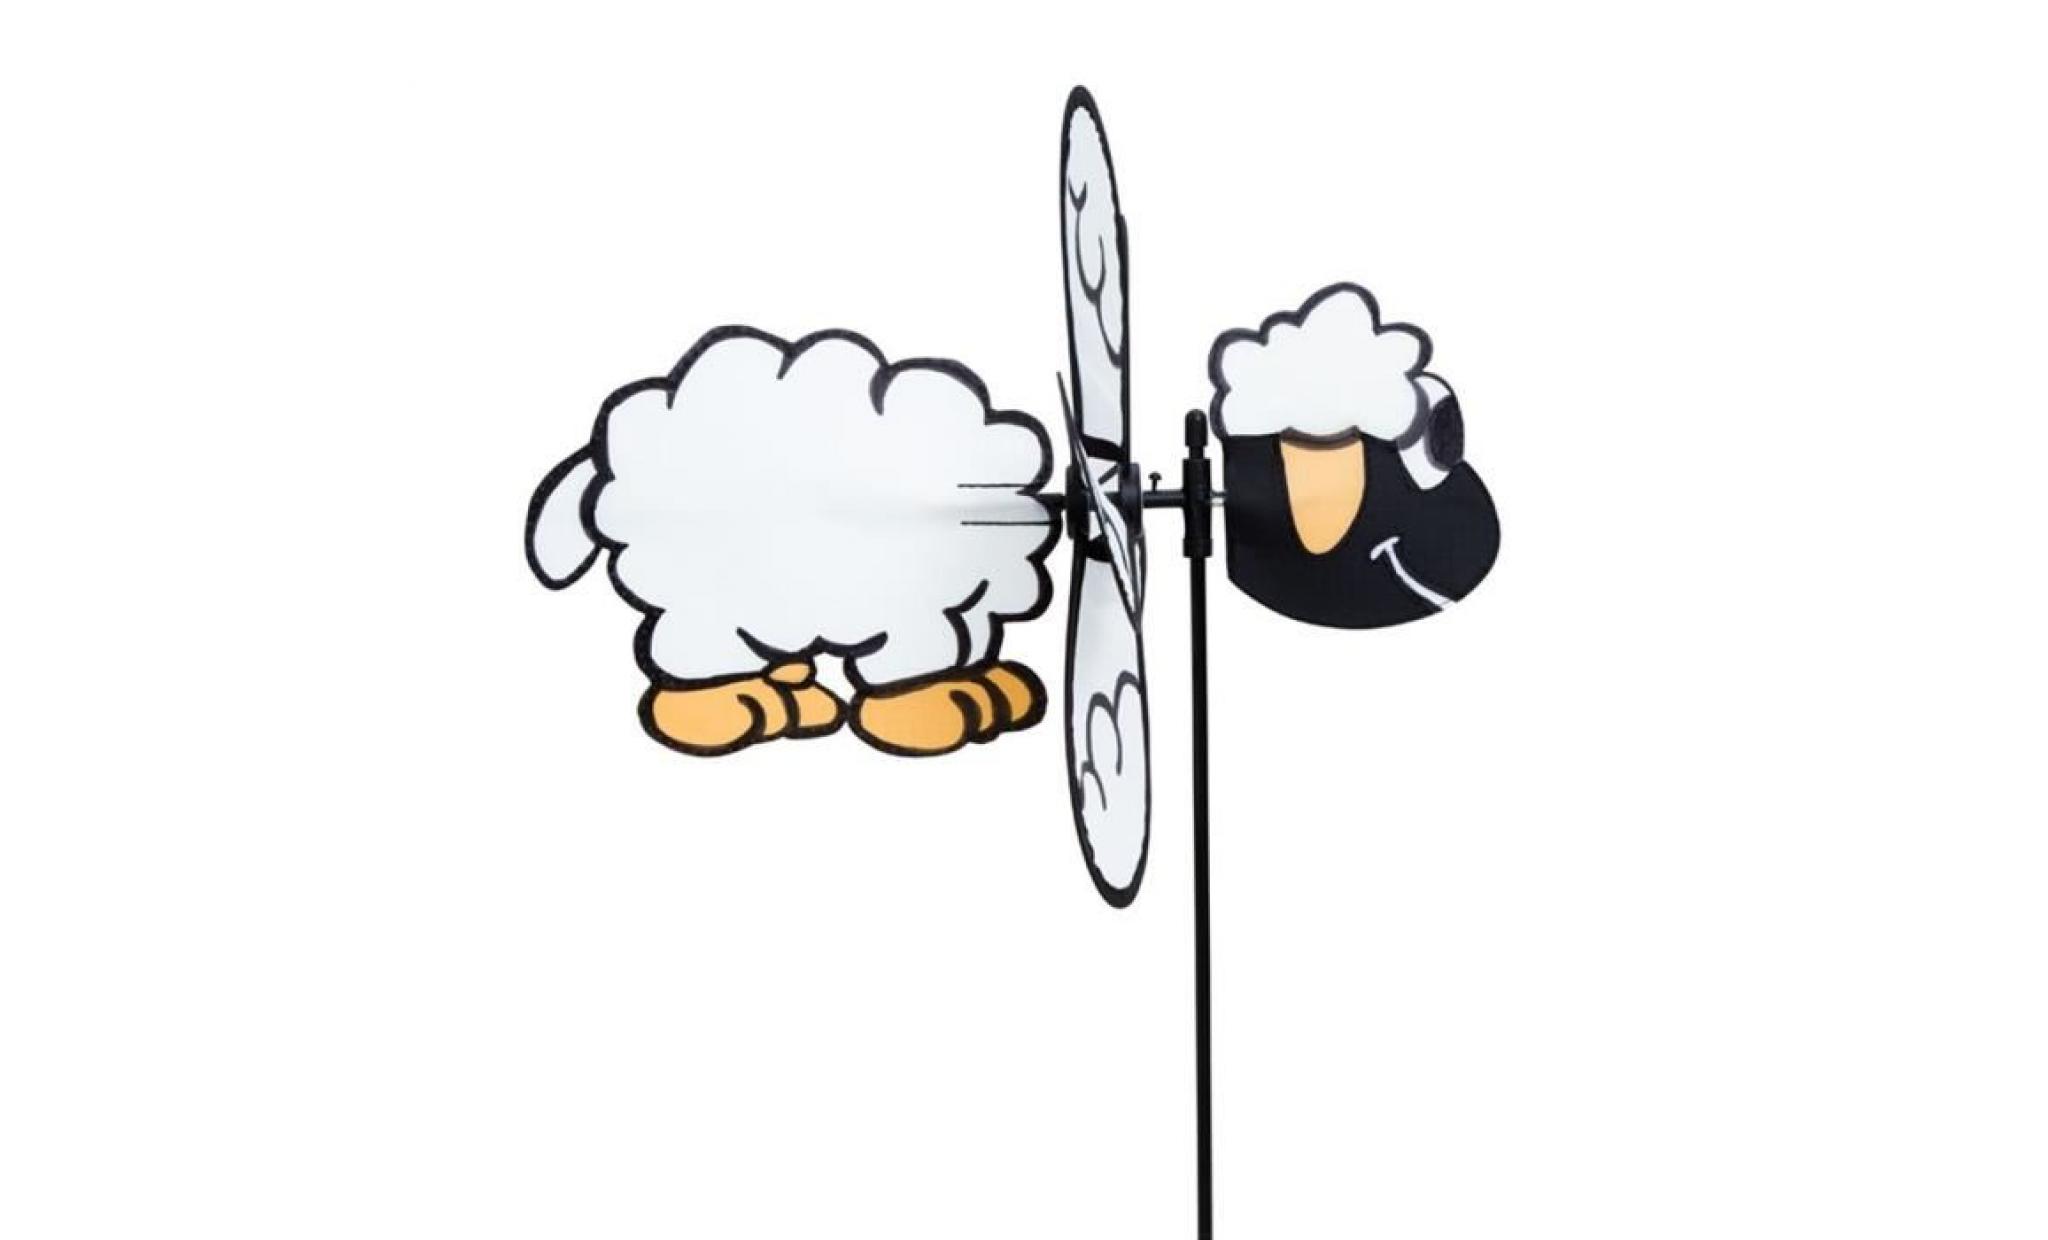 hq invento moulin à vent mouton spin critter sheep